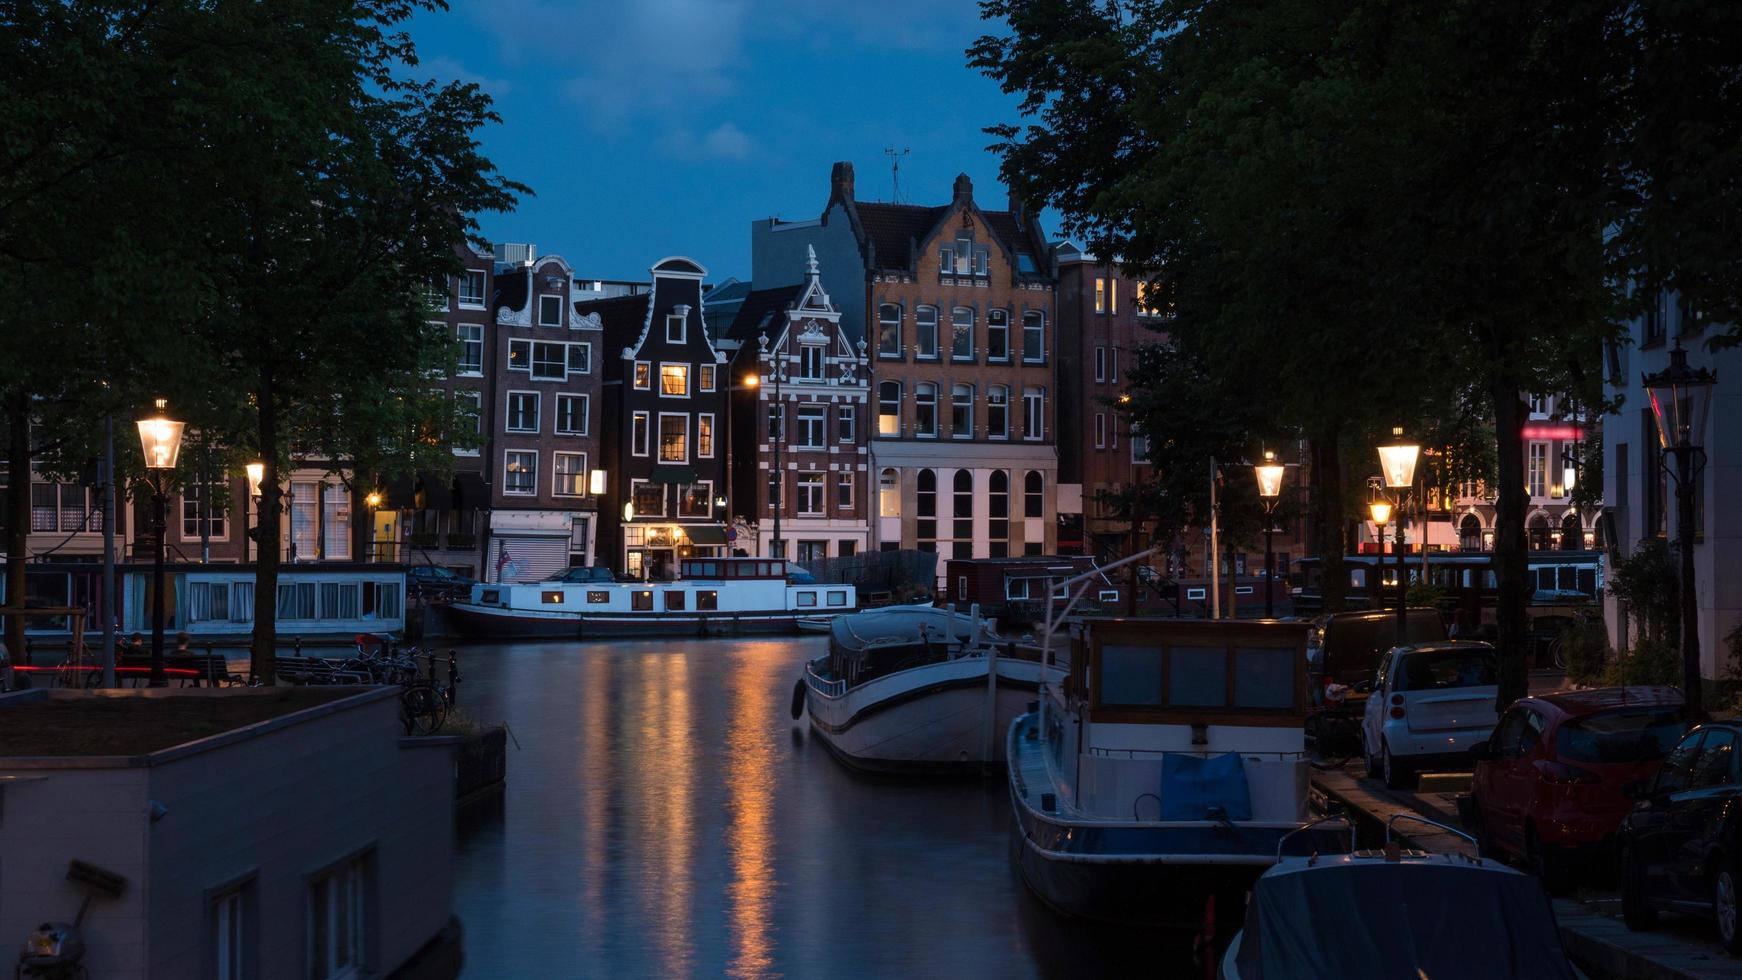 Amsterdam, Netherlands, 2020 - Amsterdam canal at night photo